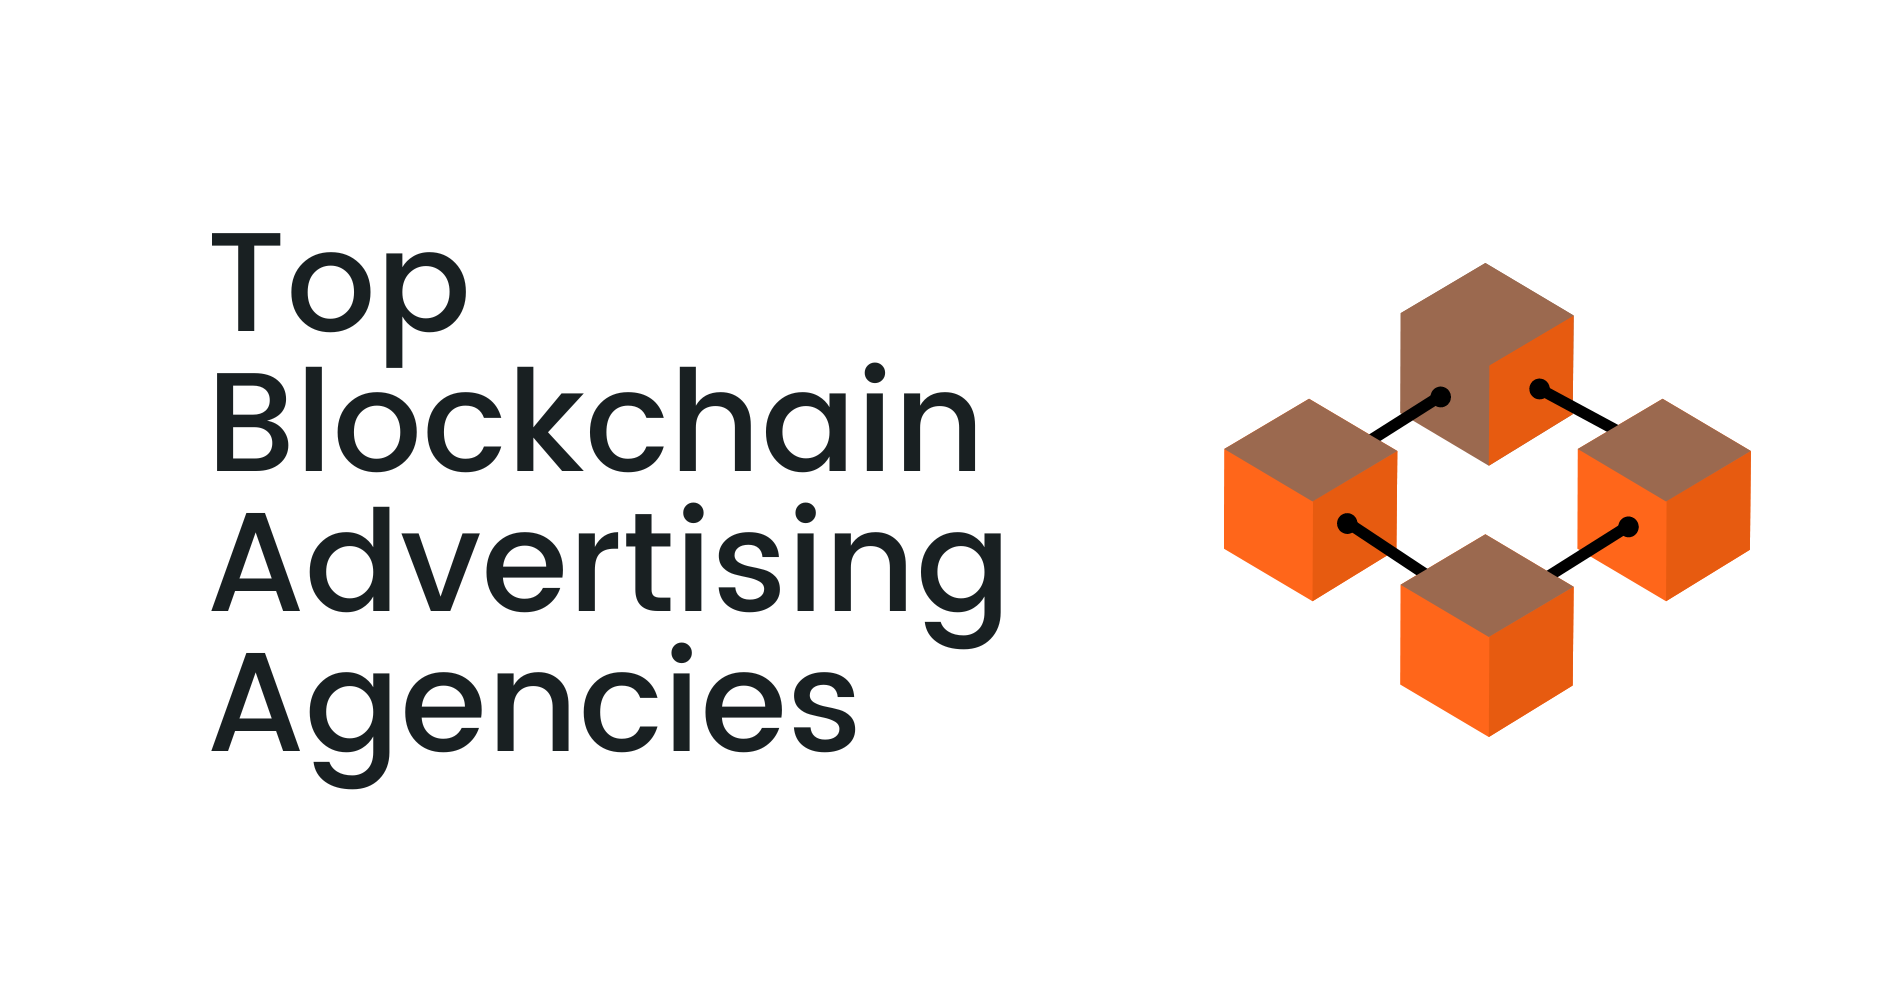 Top Blockchain Advertising Agencies